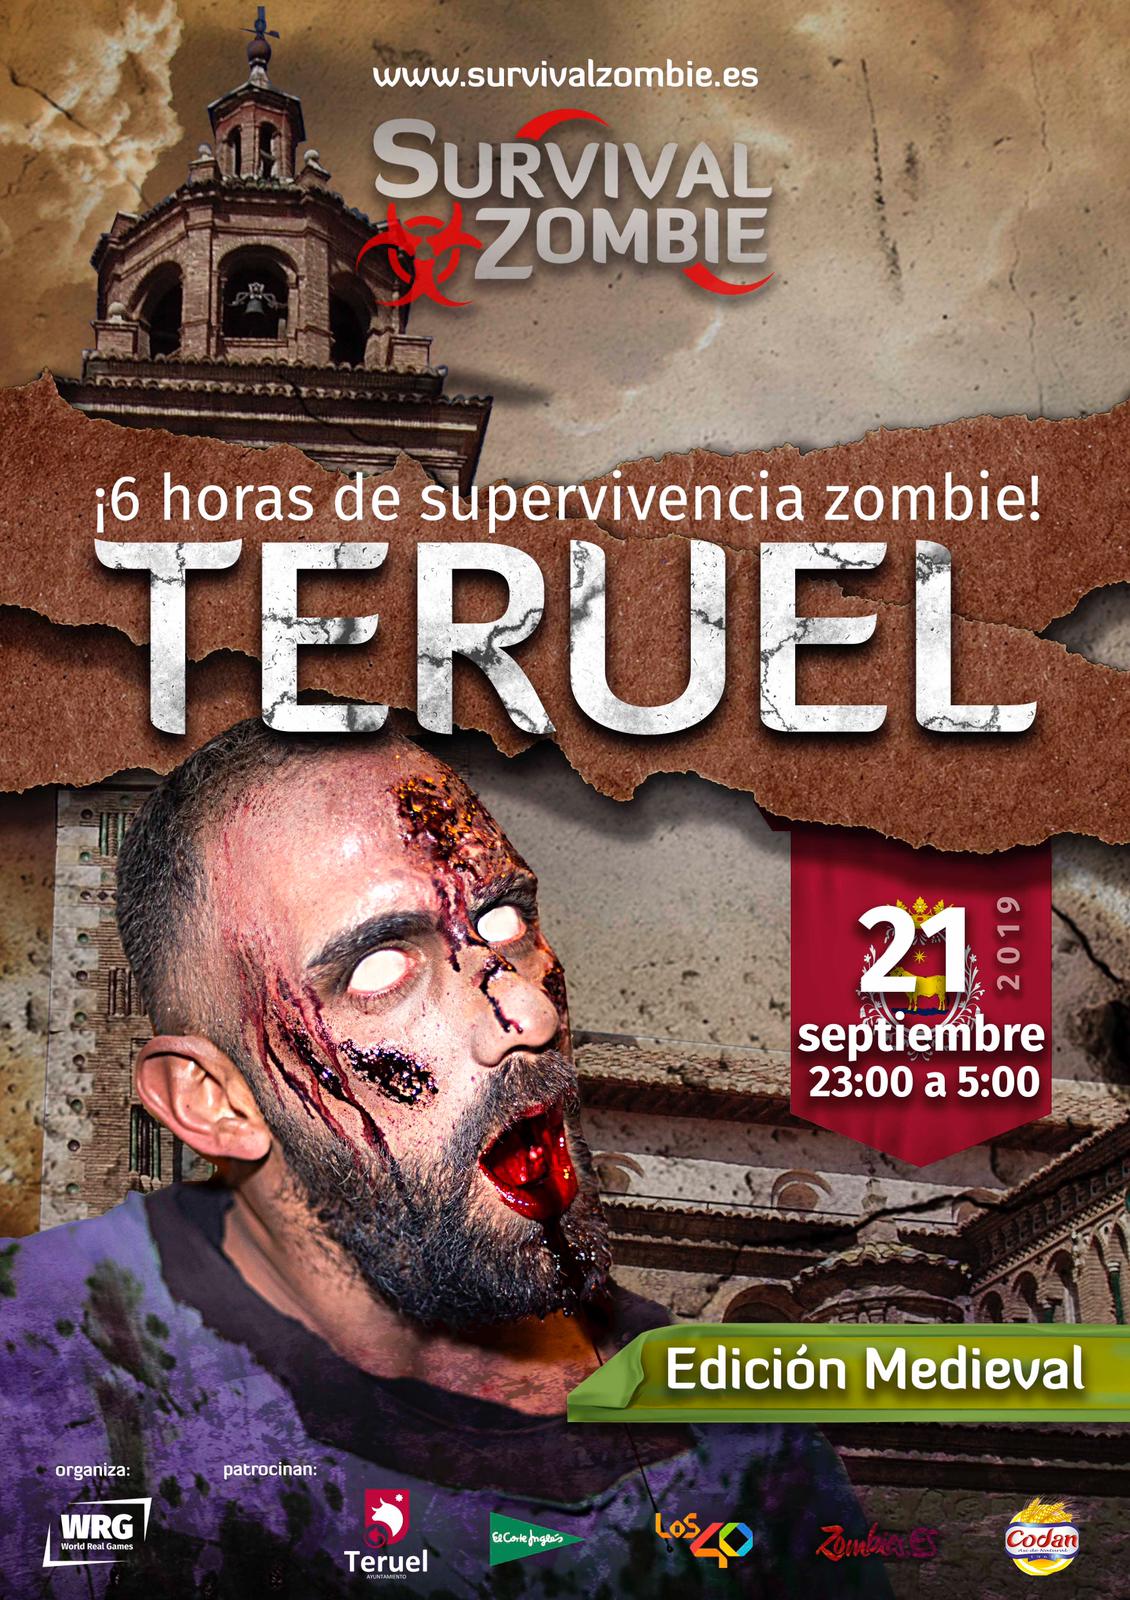 Survival Zombie Teruel 